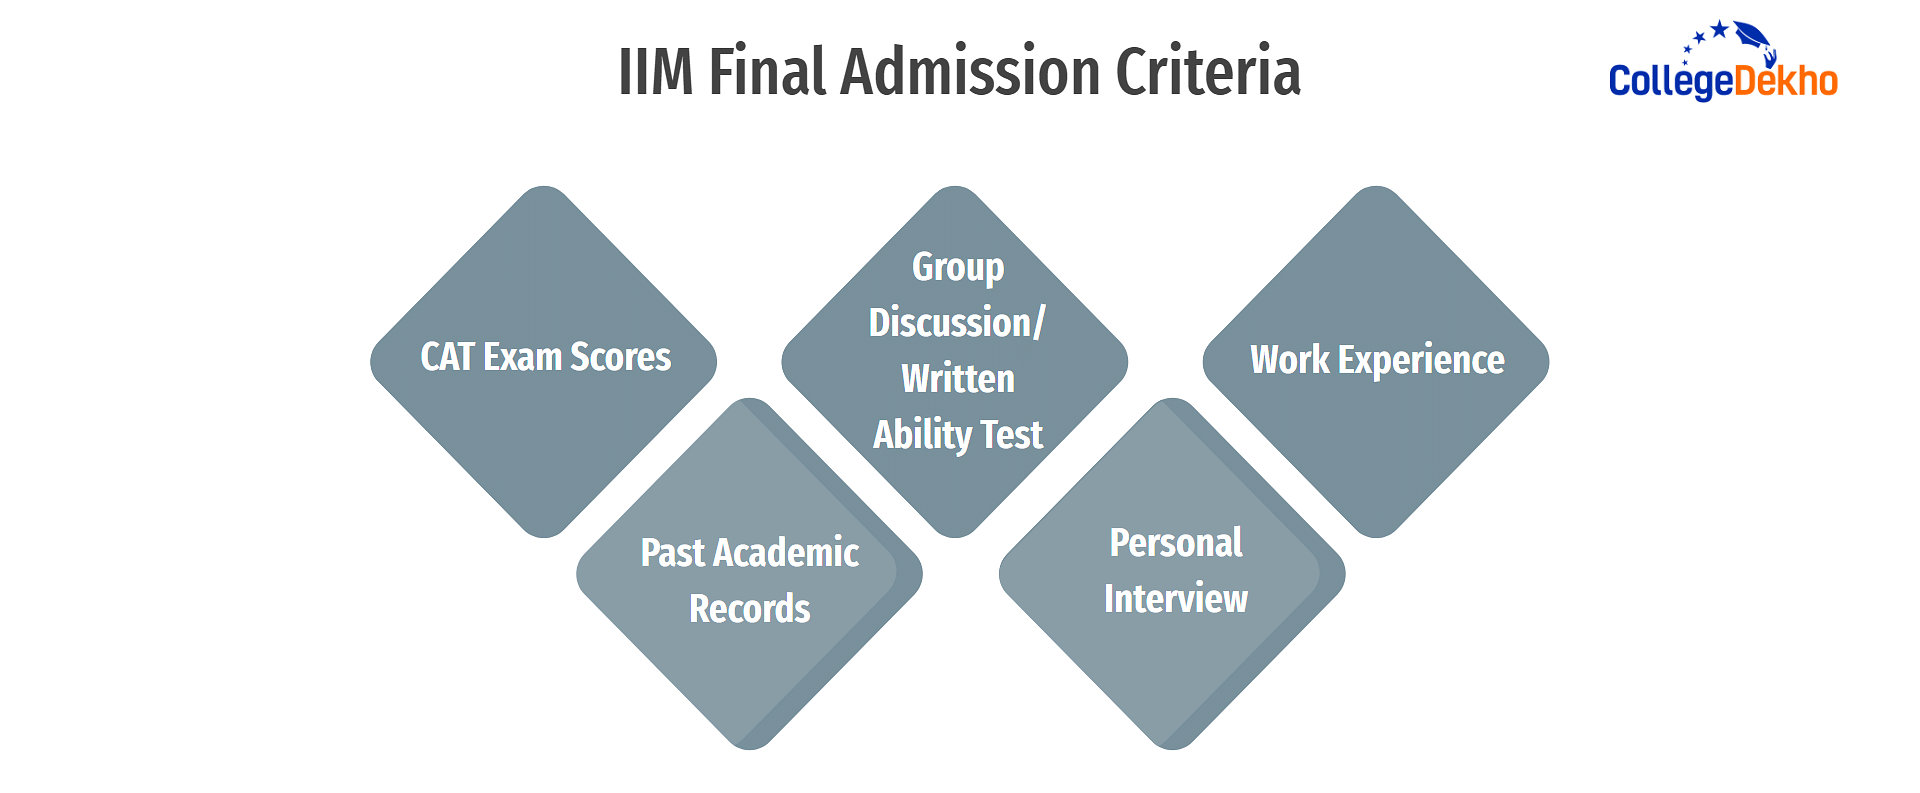 IIM Final Admission Criteria